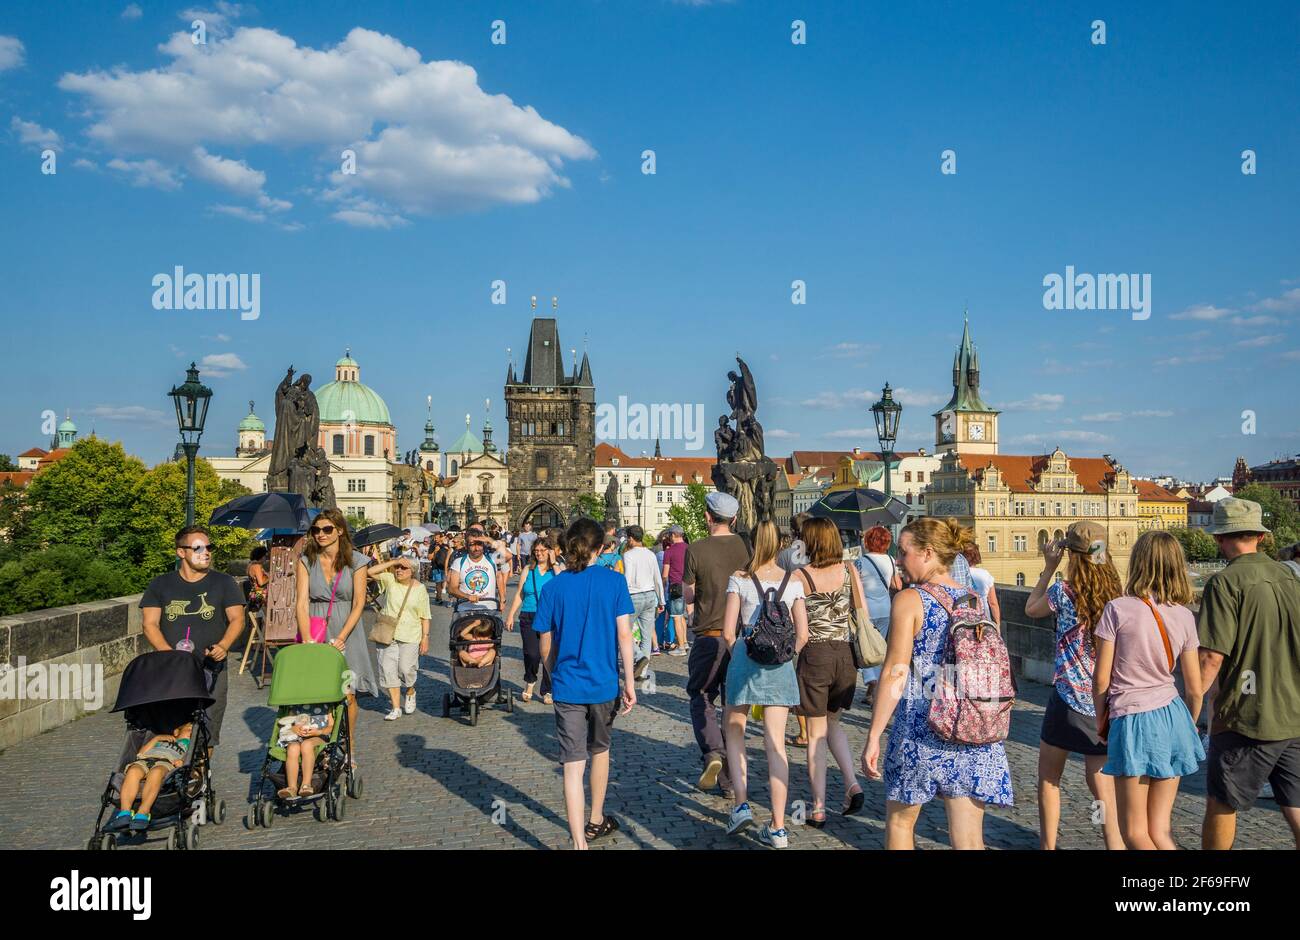 tourist crowds on Charles Bridge, a landmark stone bridge linking Prague's Old & New Towns, Capital City of Prague, Czech Republic Stock Photo